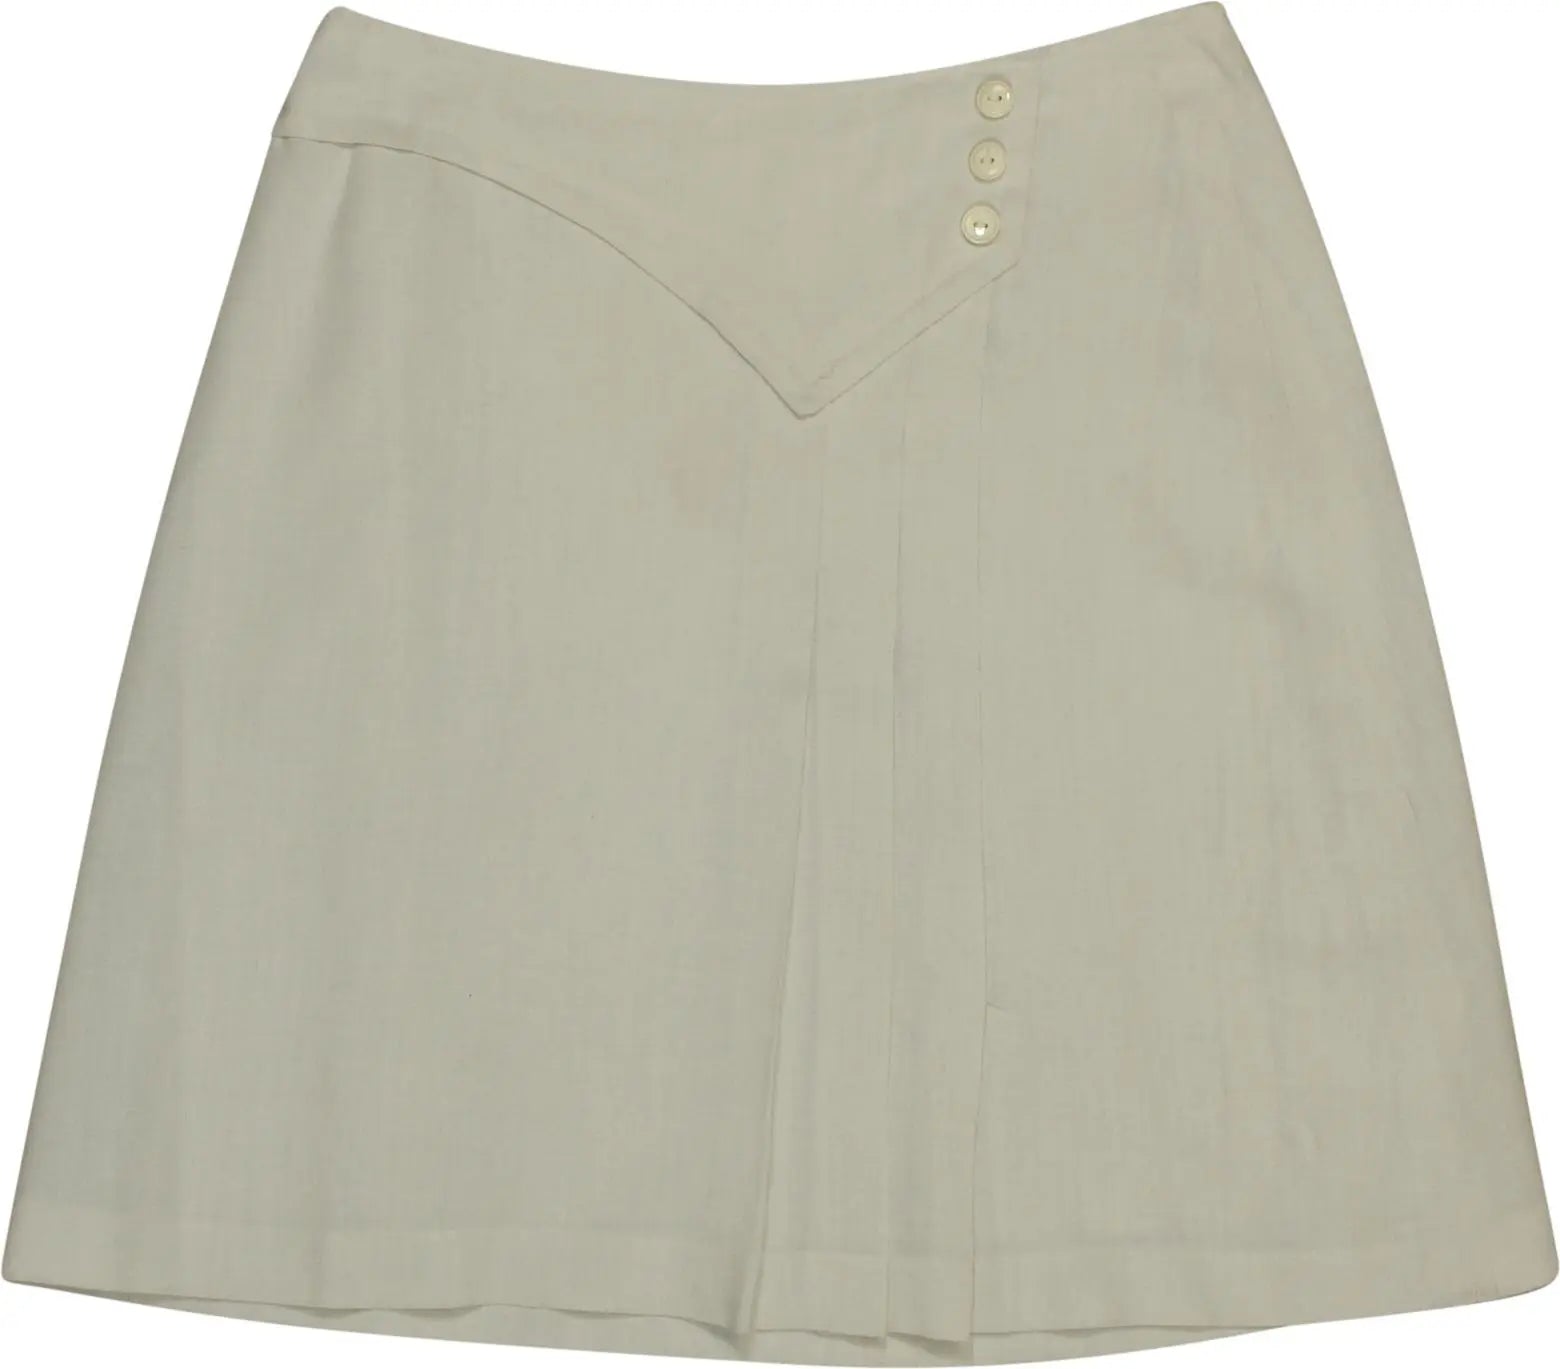 Handmade - Handmade 60s Mini Skirt- ThriftTale.com - Vintage and second handclothing